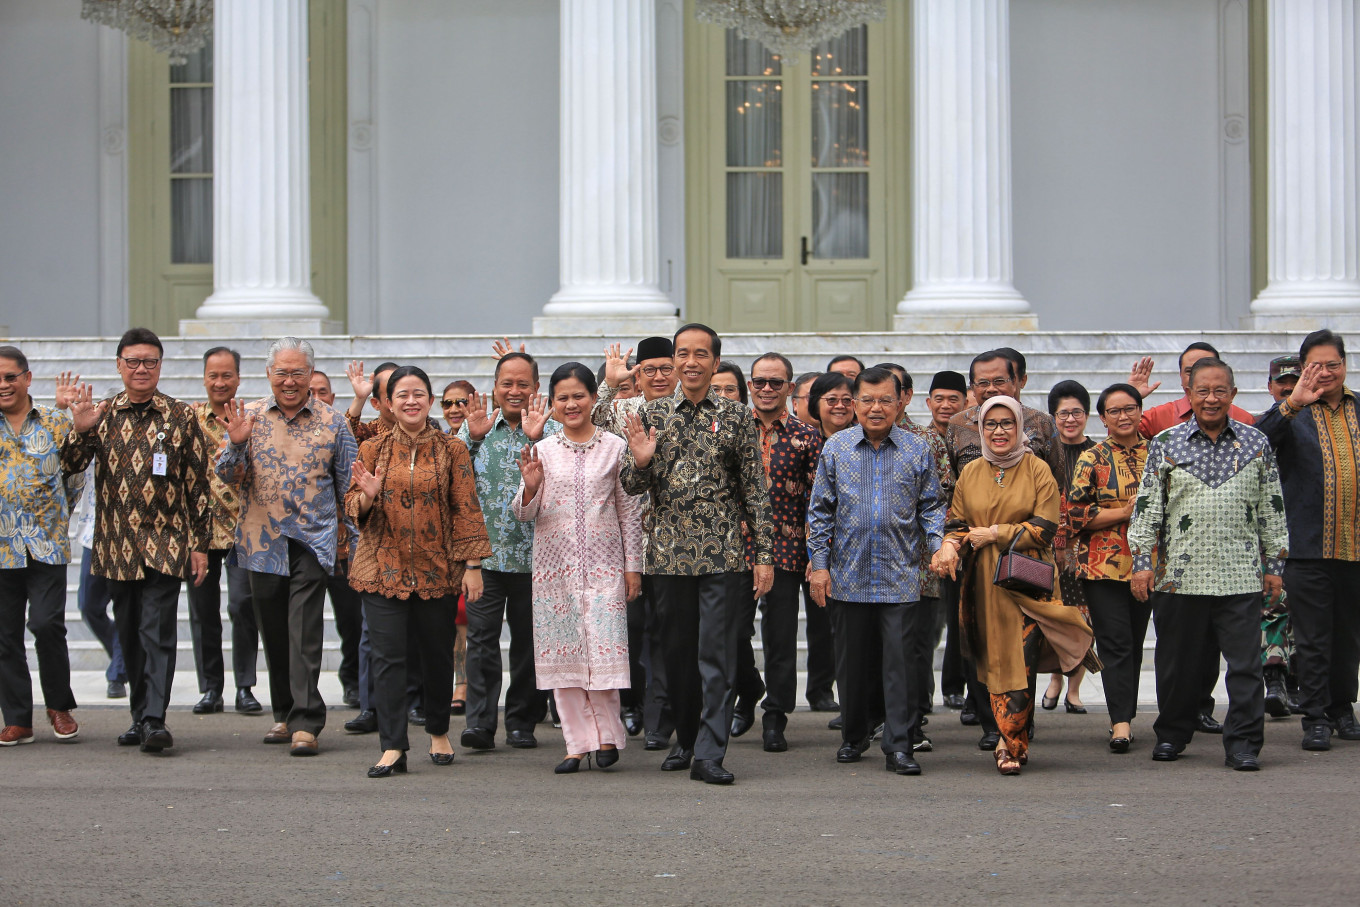 President Joko “Jokowi” Widodo and then-vice president Jusuf Kalla, accompanied by First Lady Iriana and Mufidah Jusuf Kalla, pose for a picture alongside Cabinet members during a gathering at Merdeka Palace in Jakarta on Friday.
JP/Seto Wardhana